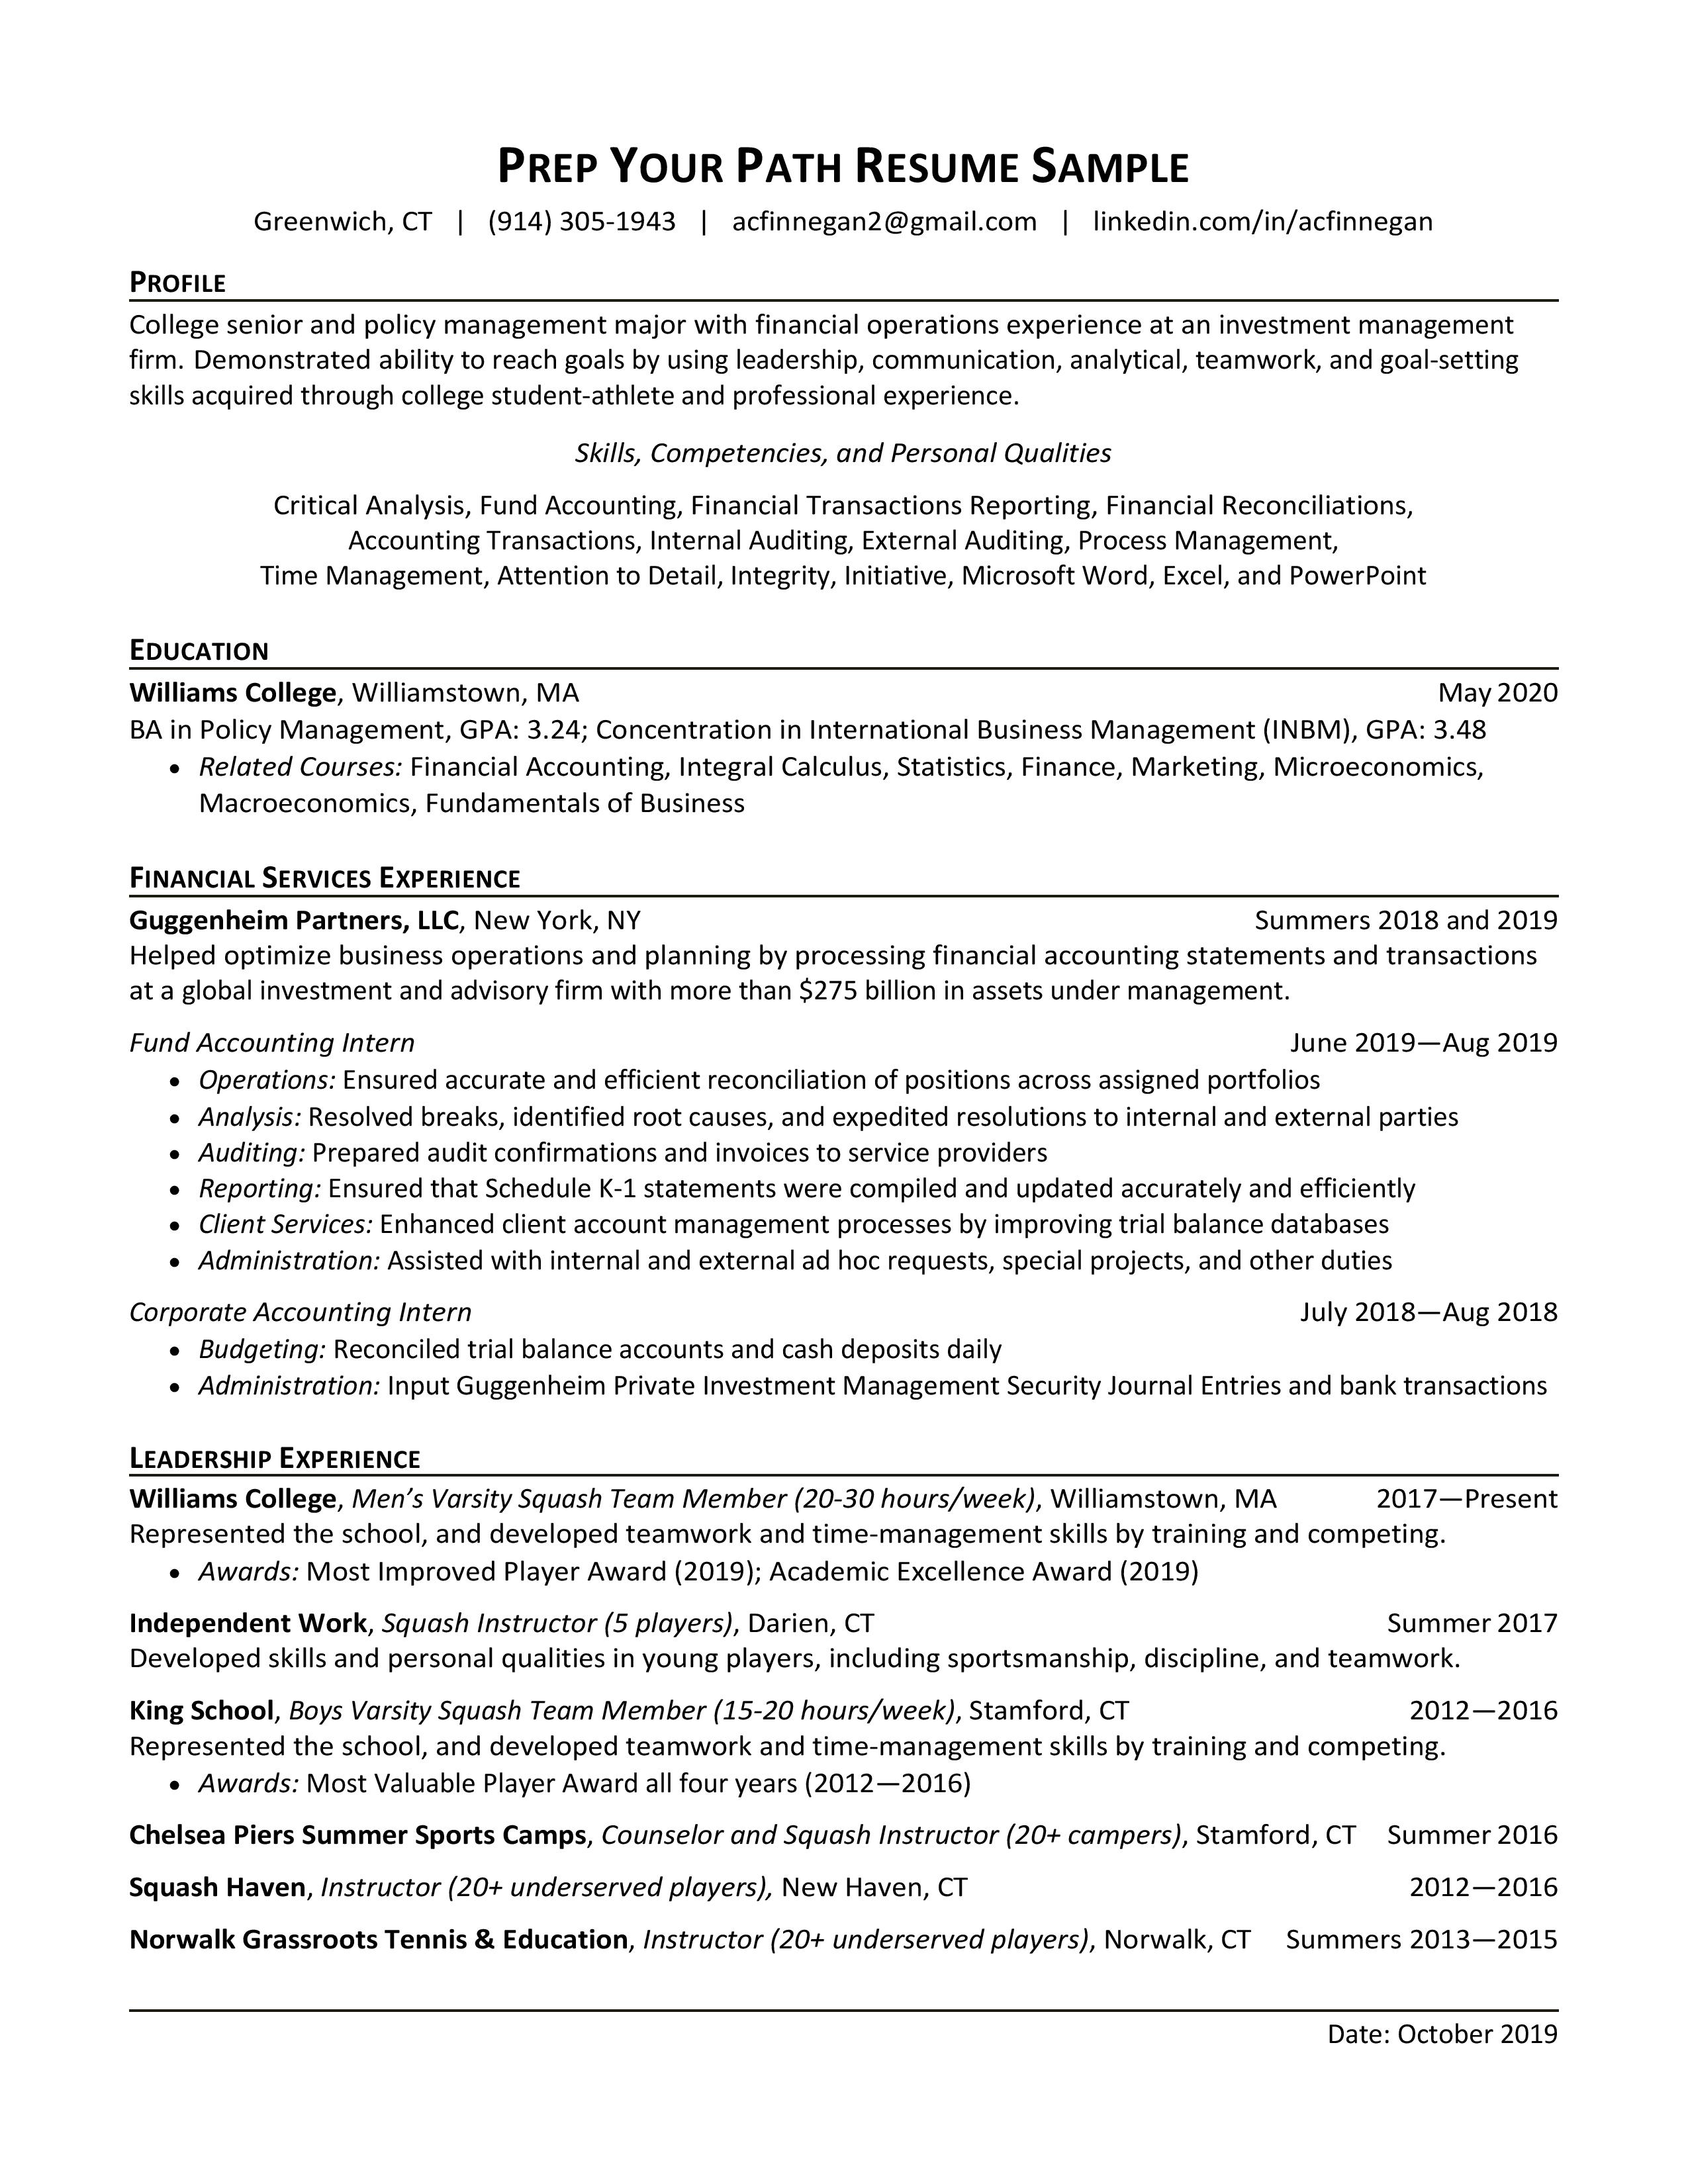 College / Recent Grad Resume - Finance #2